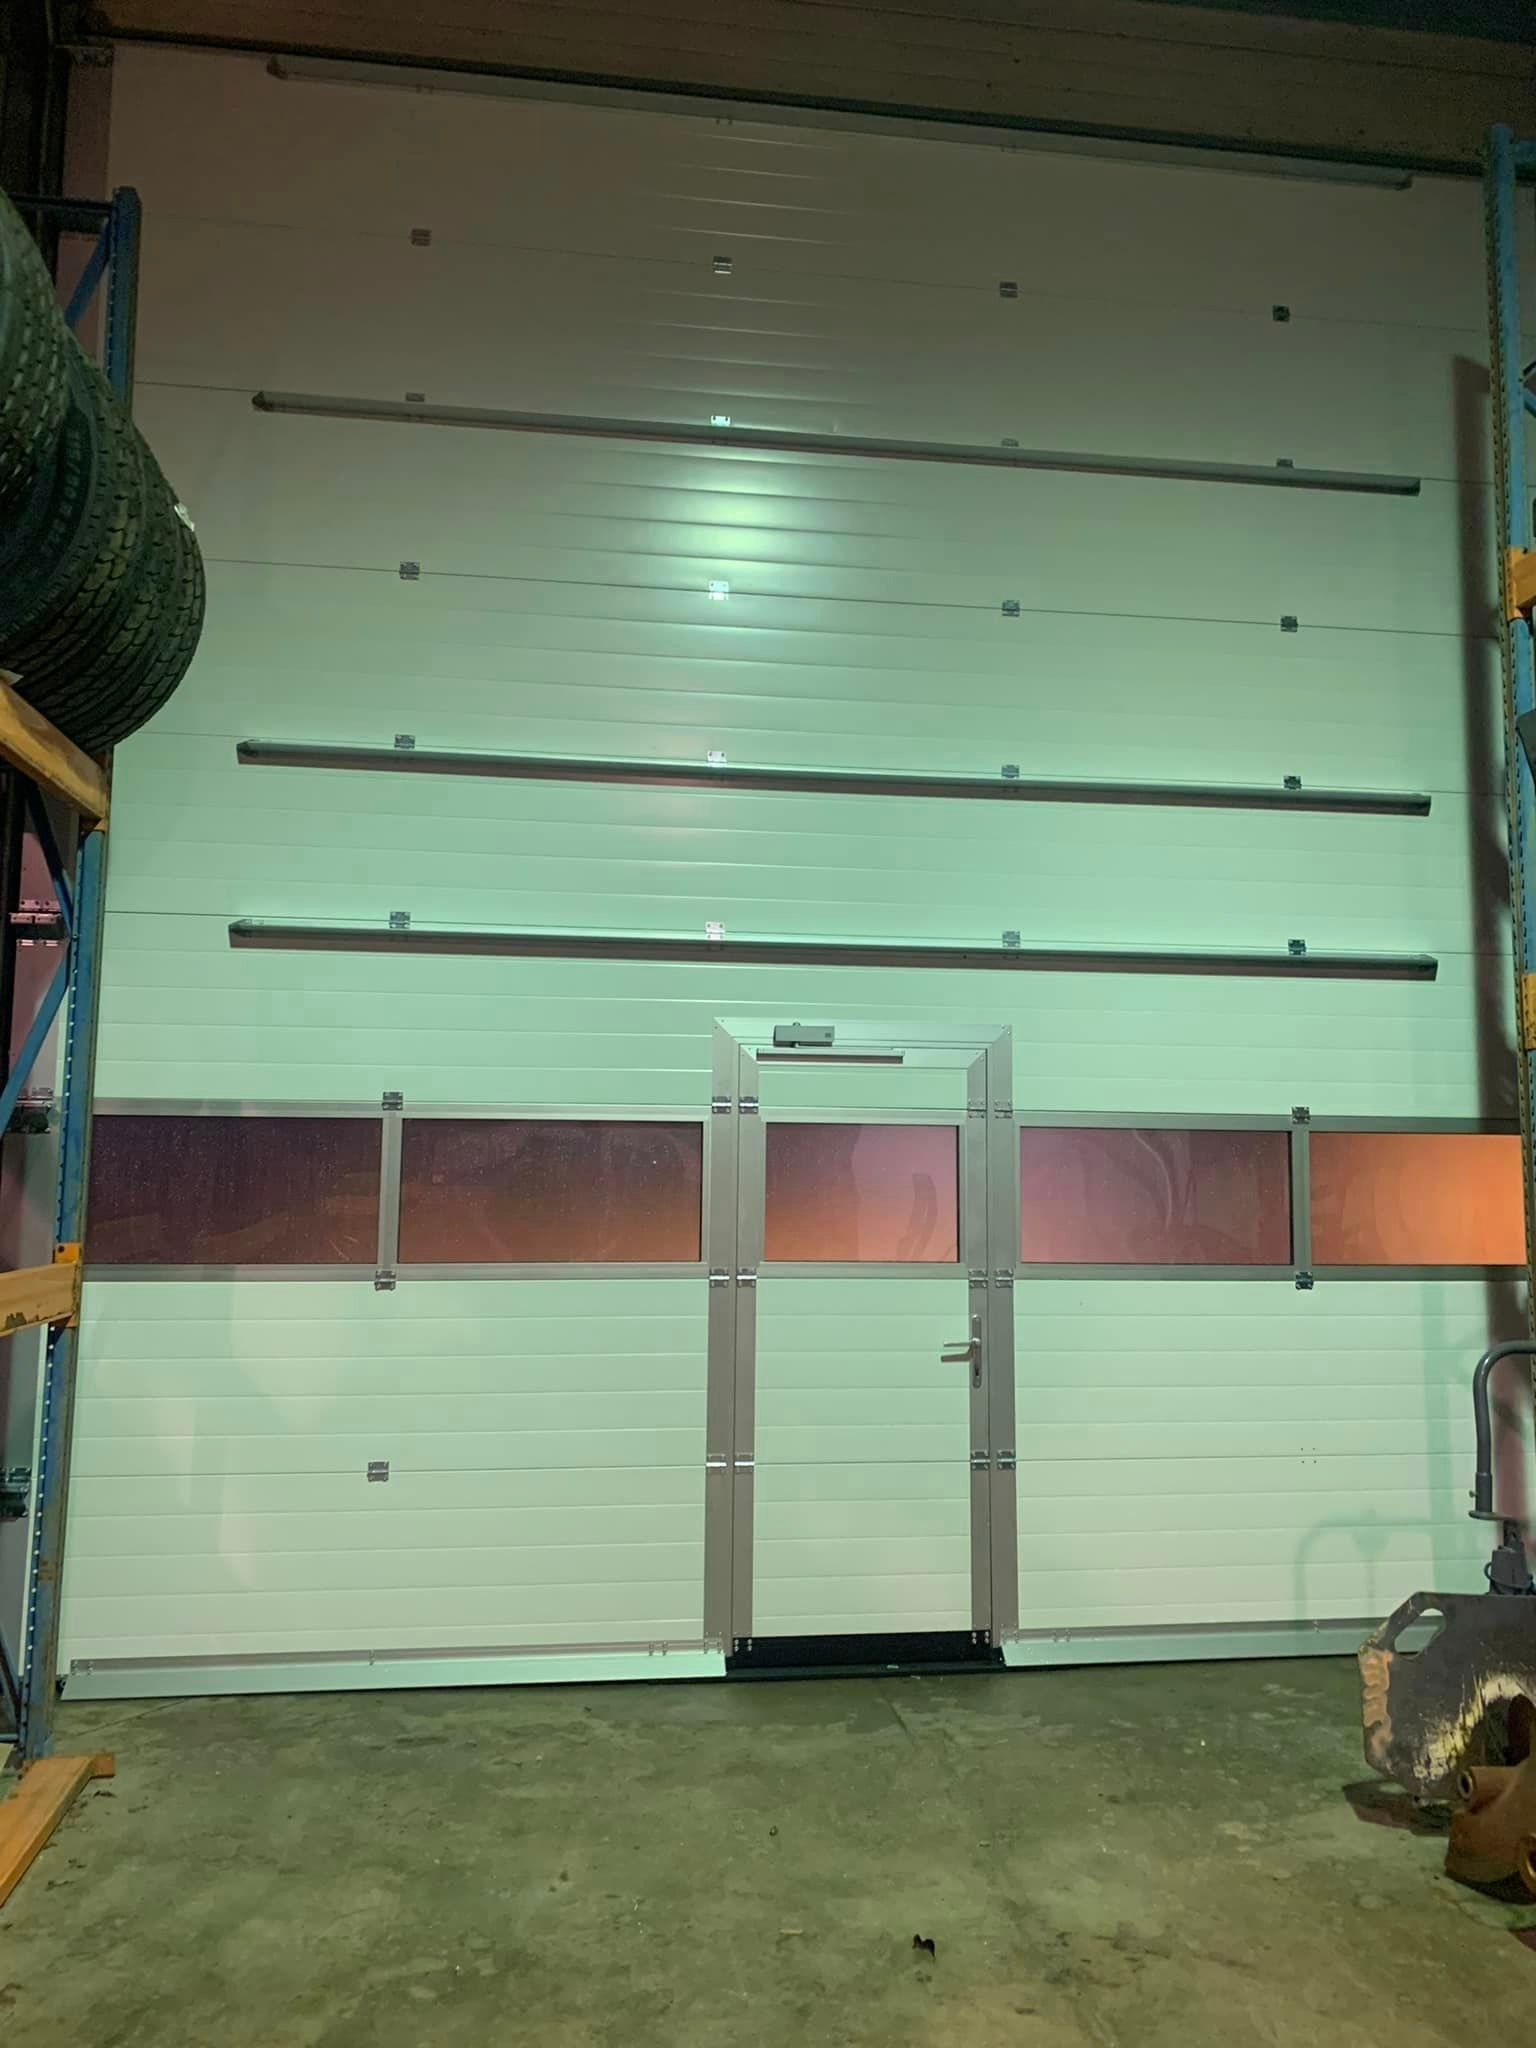 Porte de garage basculante avec une porte en plein milieu